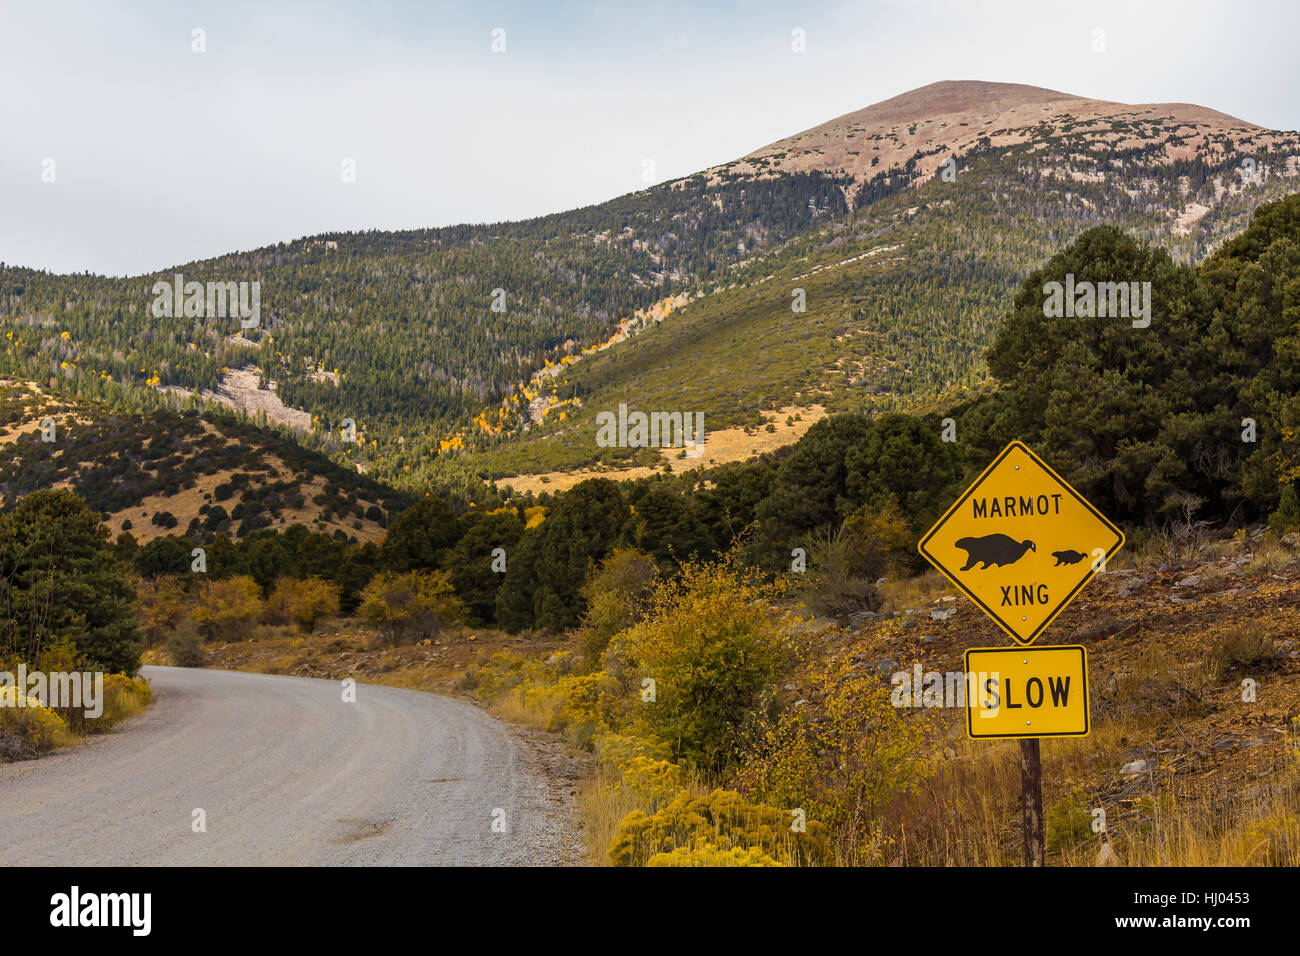 Marmot Crossing sign along road in Great Basin National Park, Nevada, USA Stock Photo